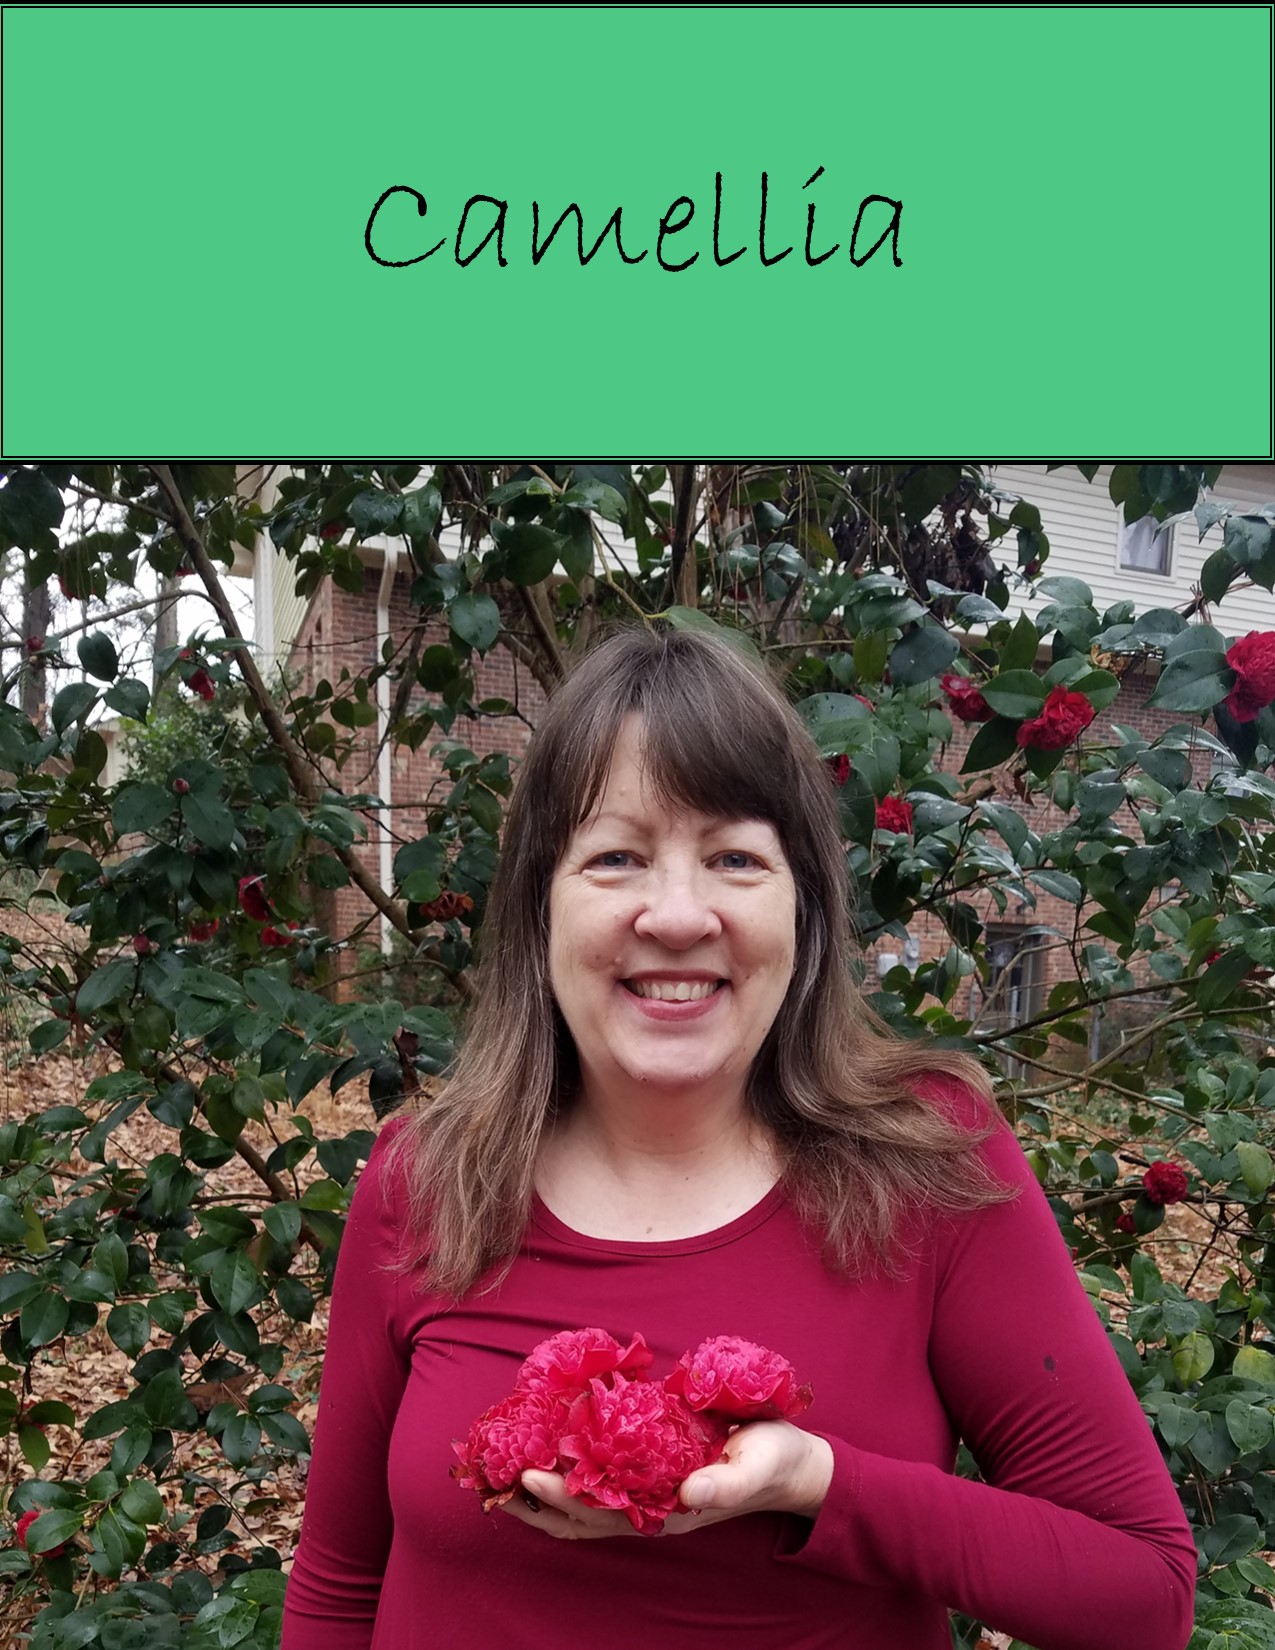 Camellia (thank you, Simon & Garfunkel!)